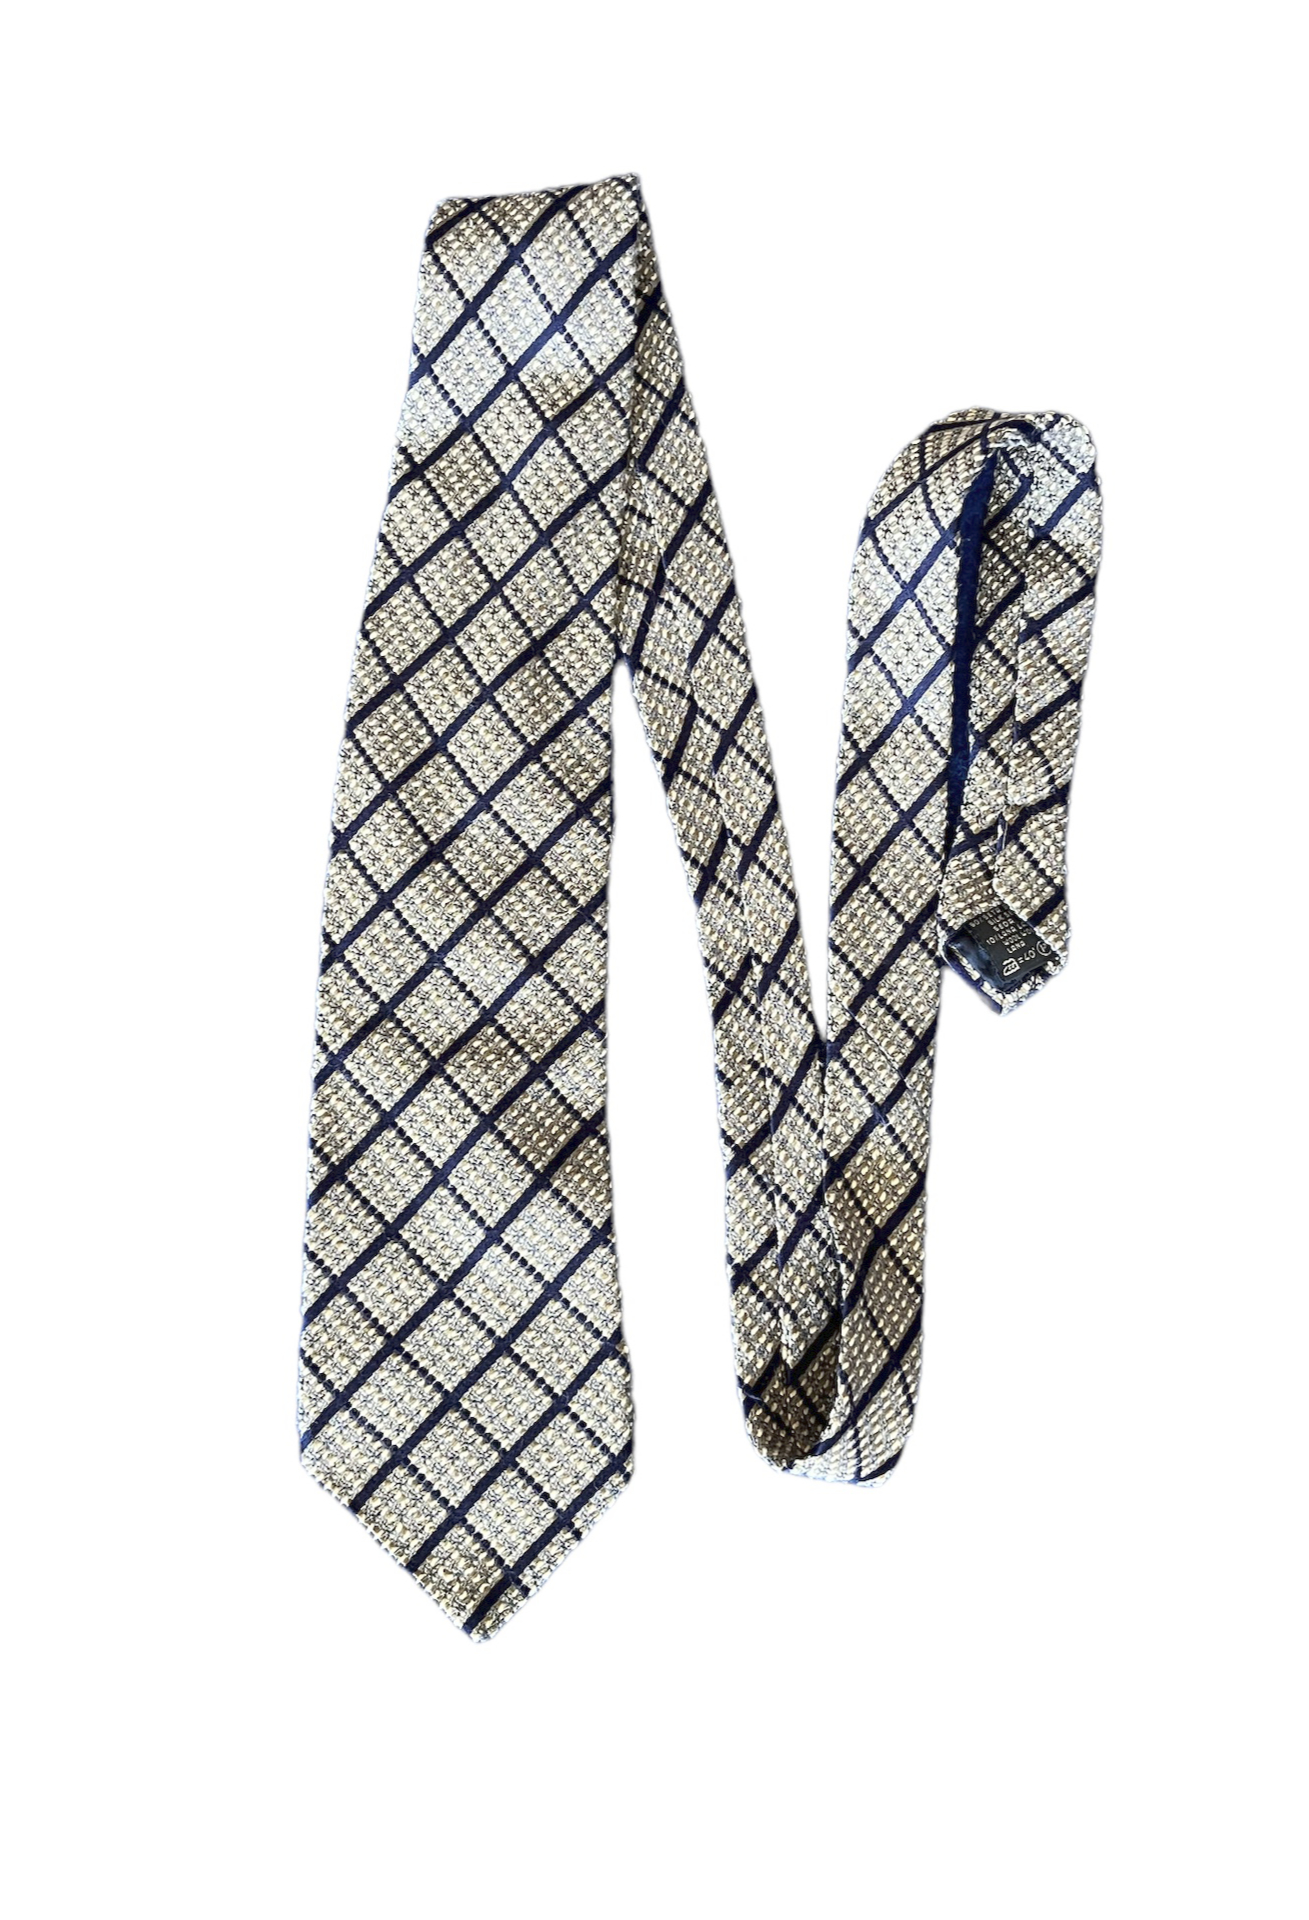 Ermenegildo Zegna - Vintage Italian Tie